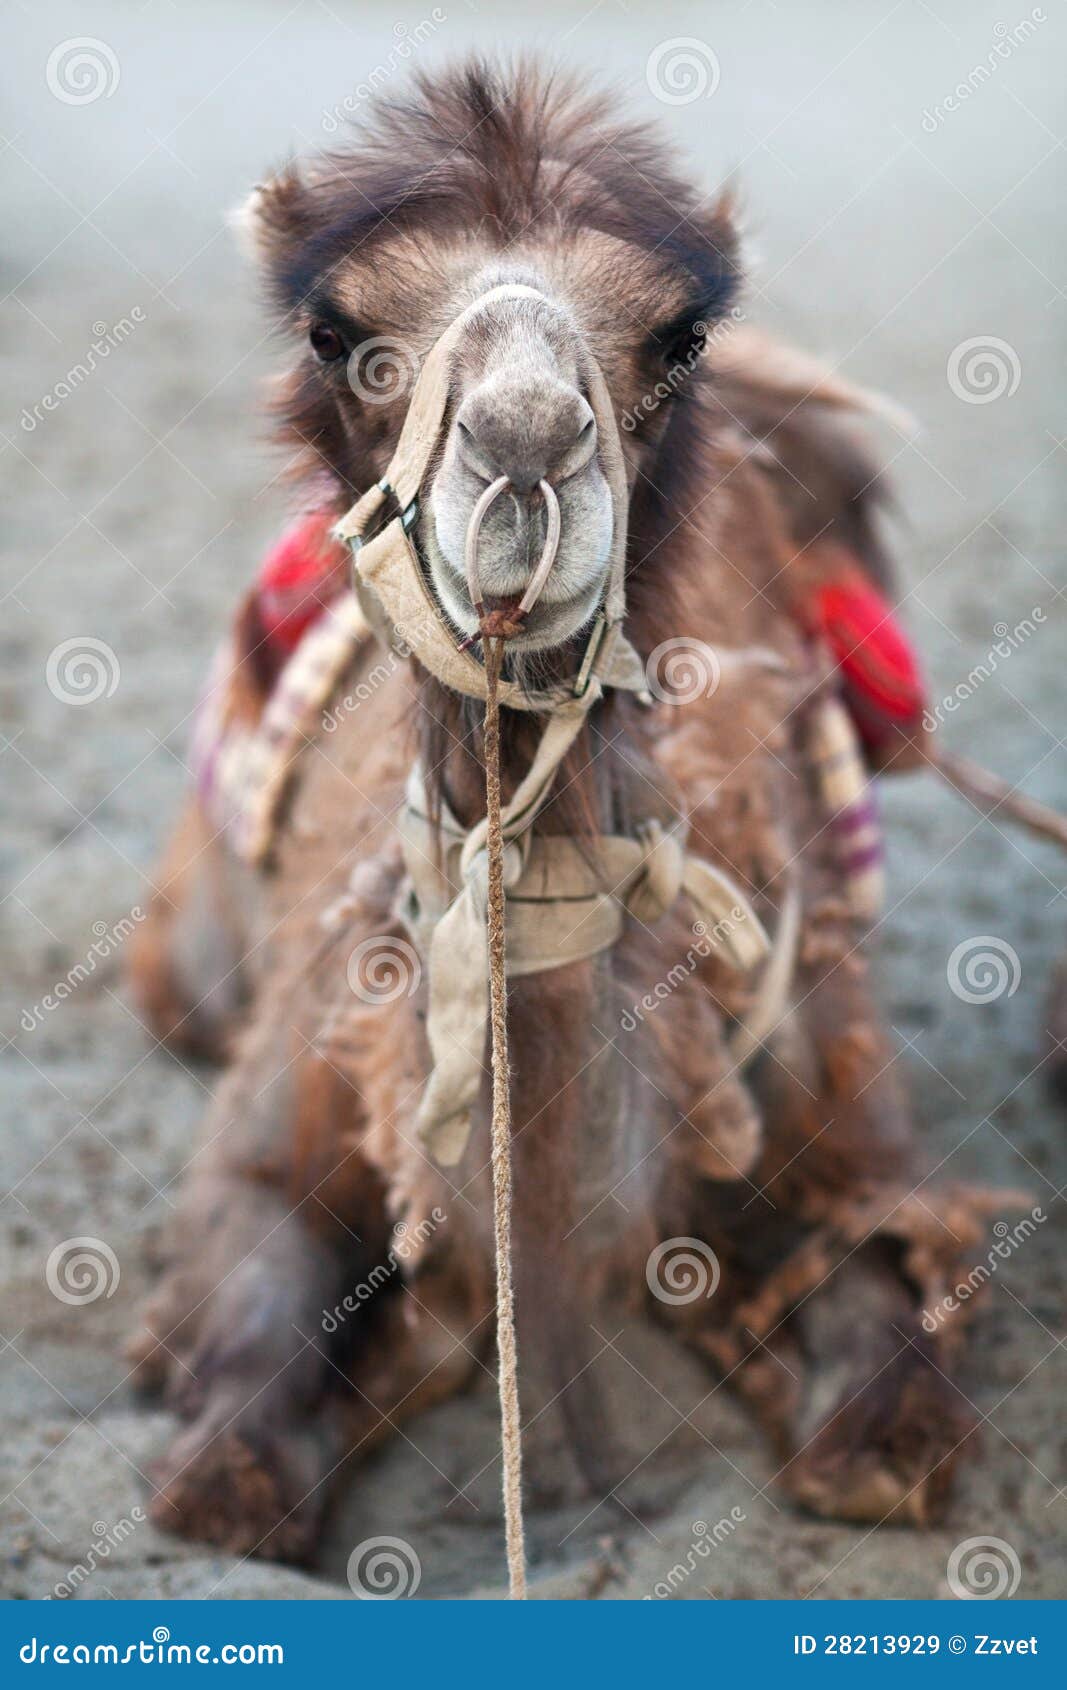 bactrian camel in nubra valley, ladakh, north india